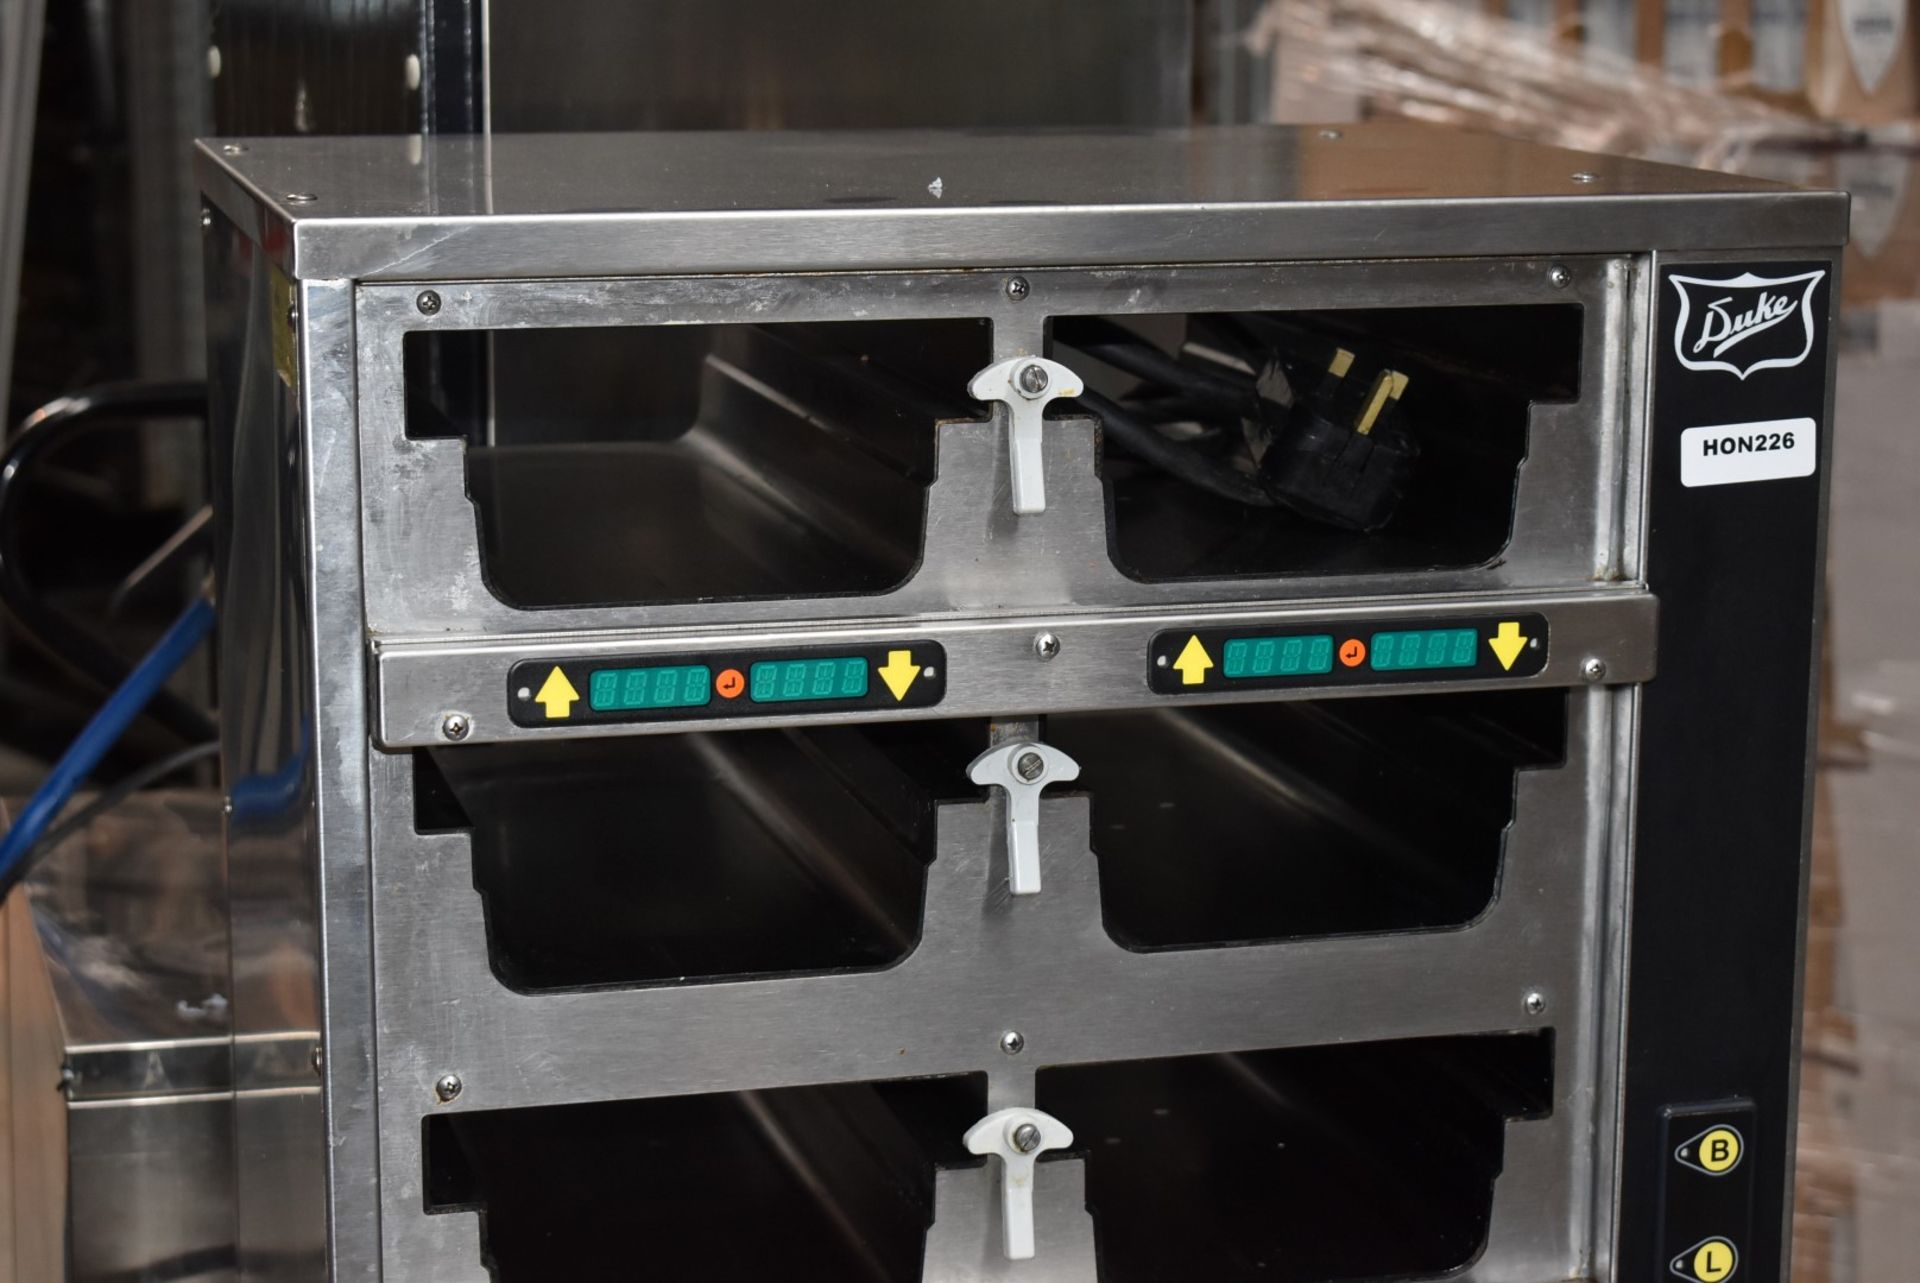 1 x Duke FWM Food Warming Holding Cabinet With HeatSinnk Technology - Model FWM3-42PR6-230 - Image 7 of 11